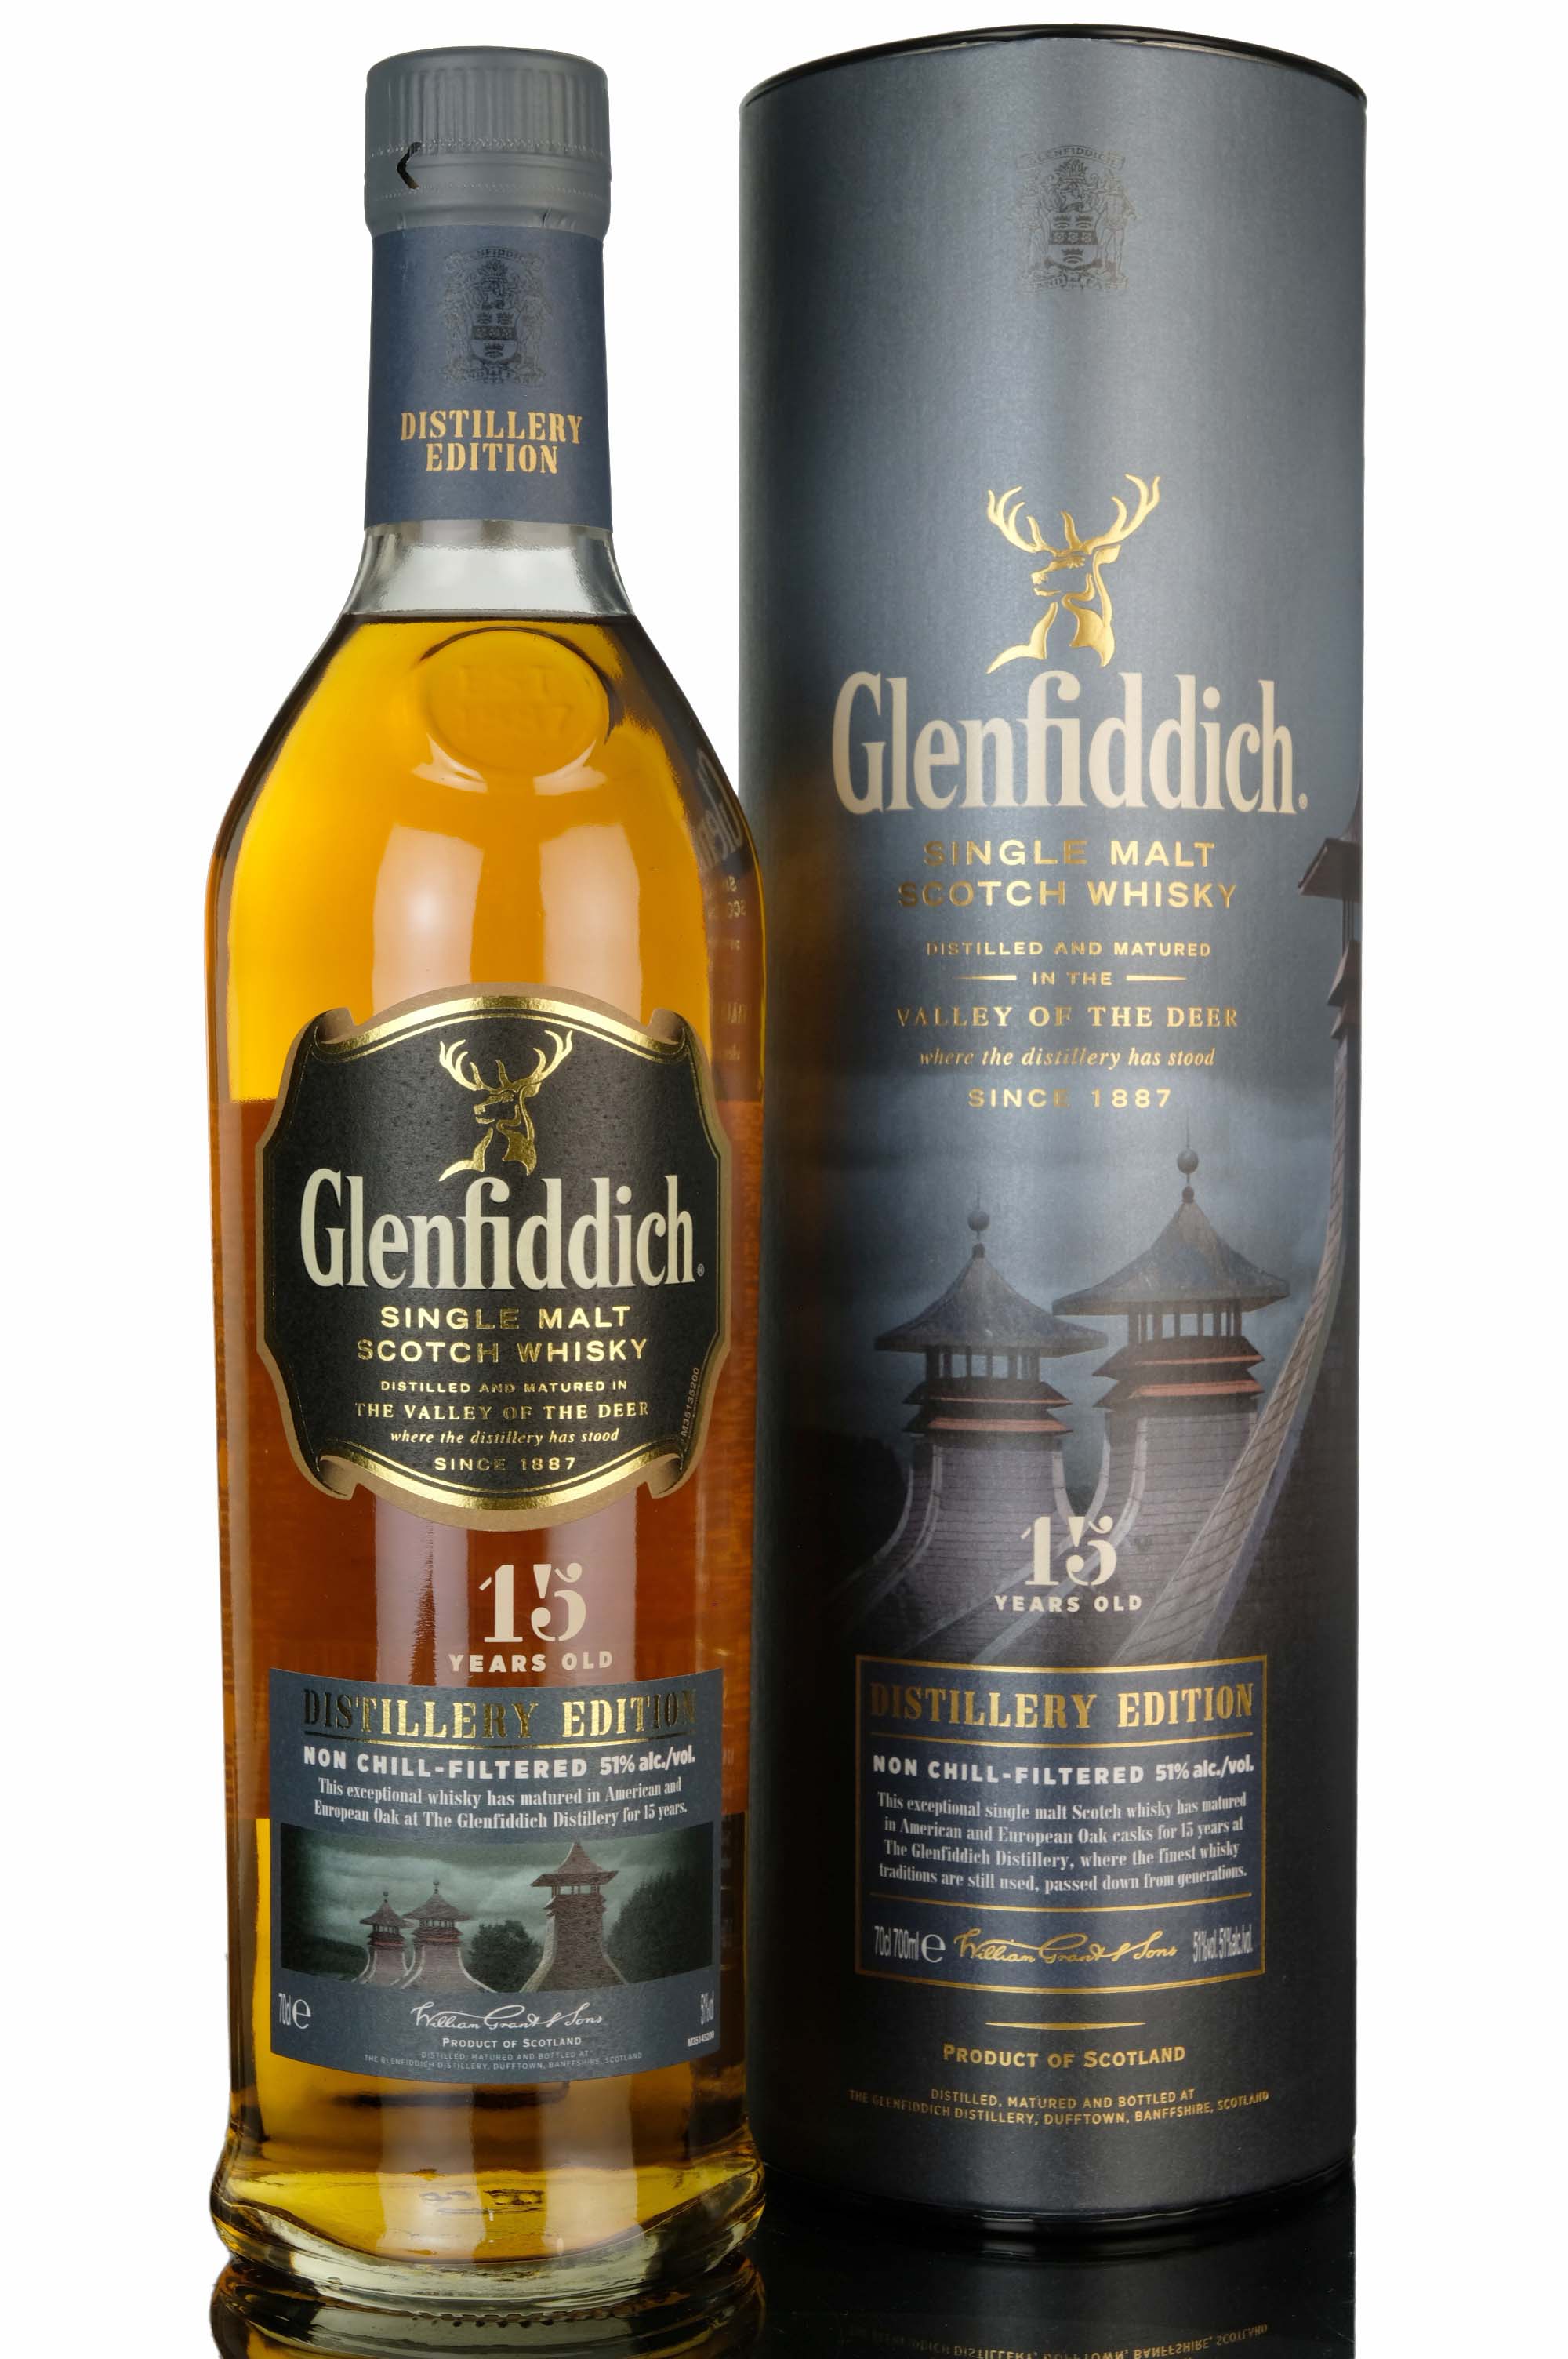 Glenfiddich 15 Year Old - Distillery Edition - 2010s